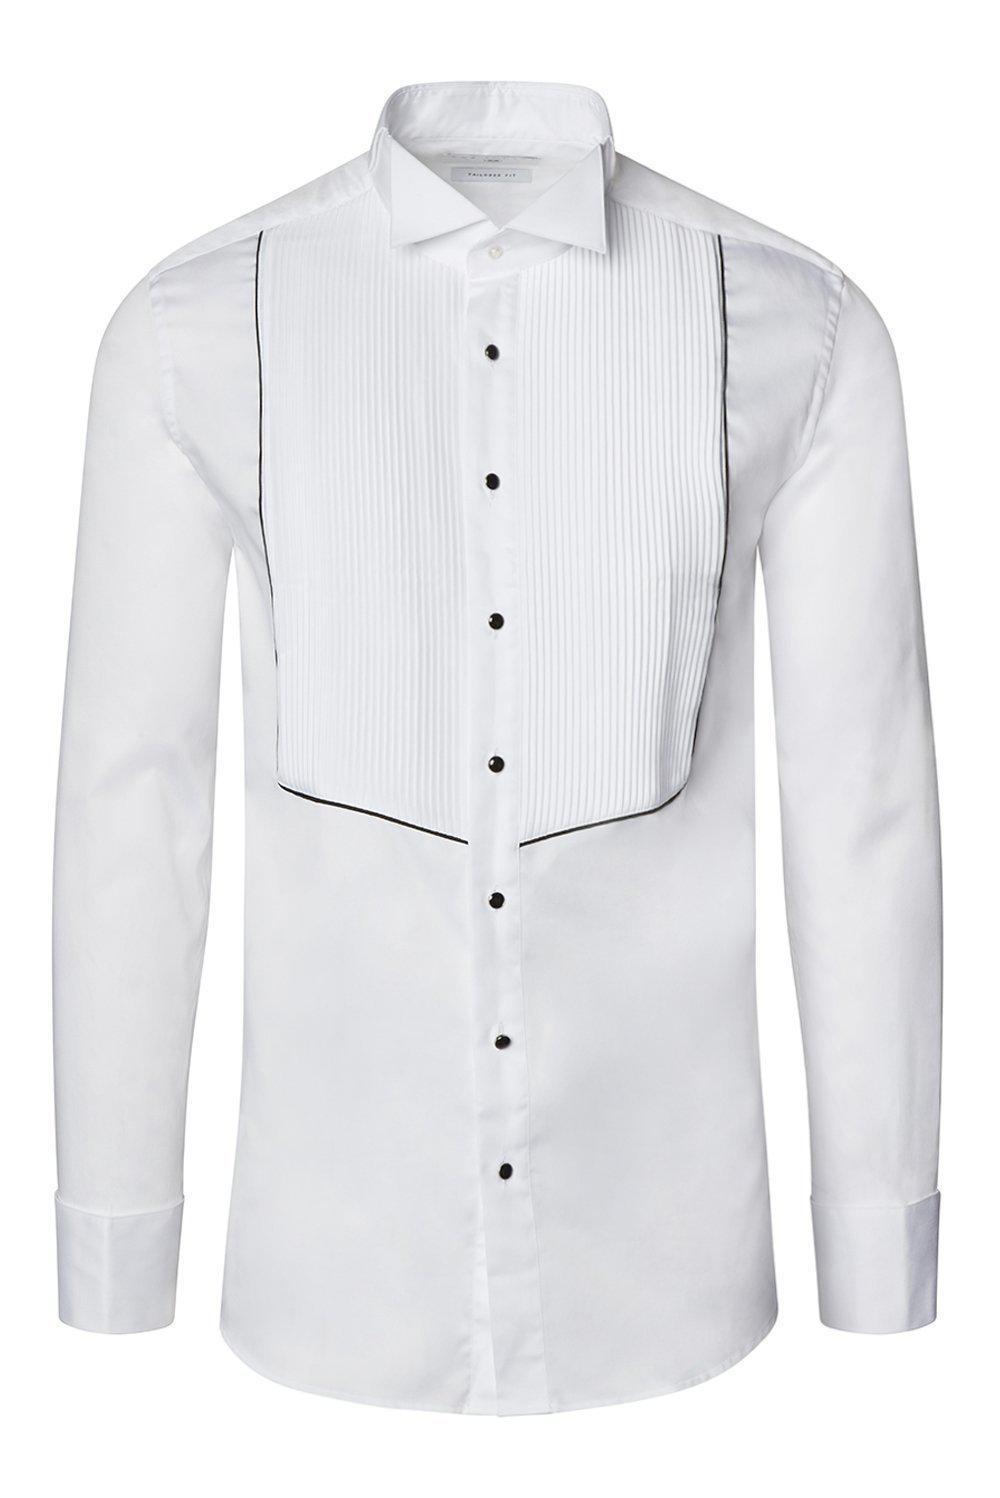 pleated-wing-tip-collar-shirt-white-black-formal-shirts-ron-tomson-white-black-s.jpg